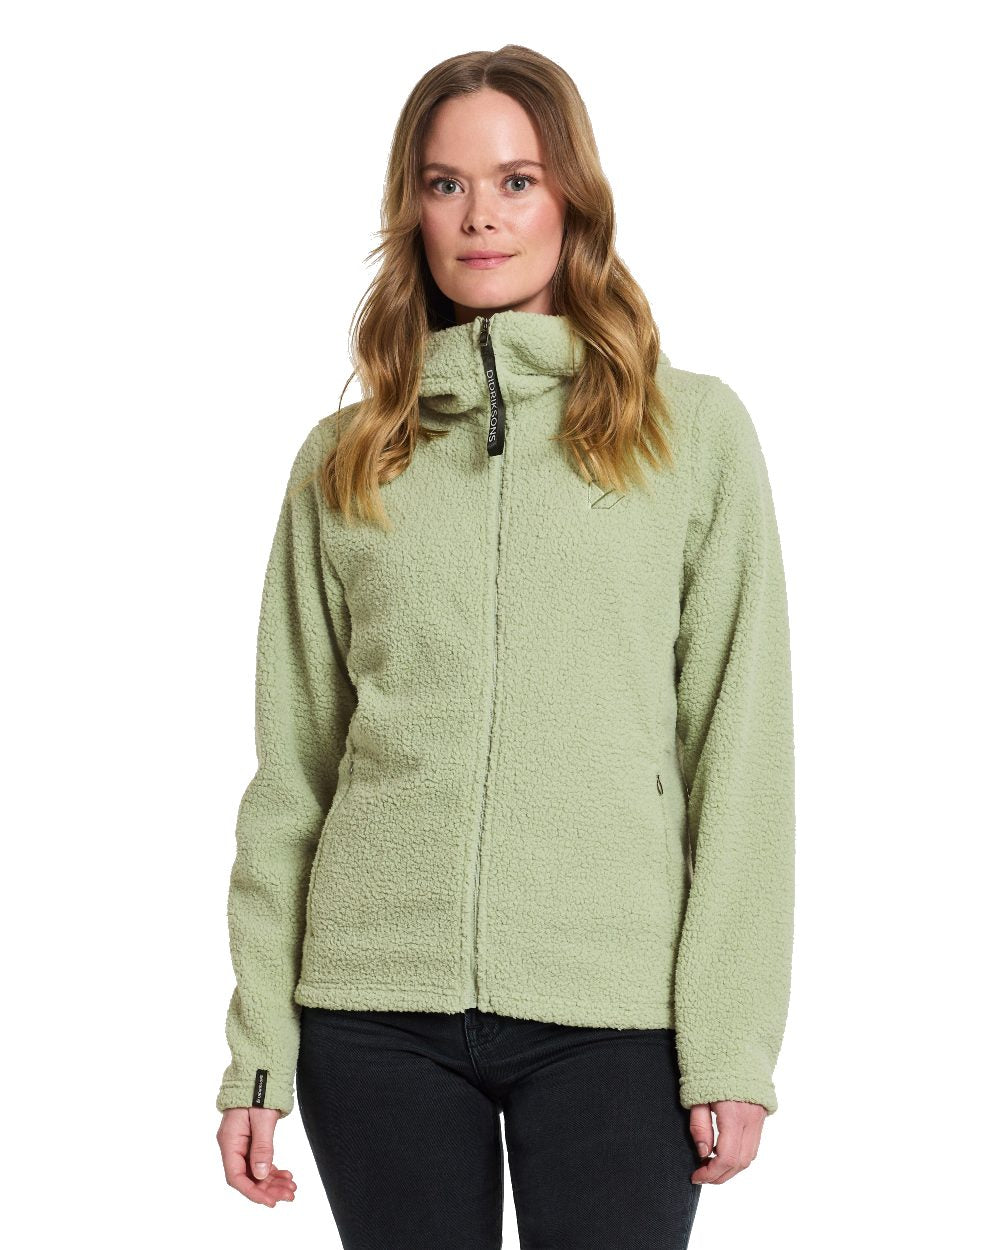 Soft Green coloured Didriksons Anniken Womens Full Zip Fleece on White background 